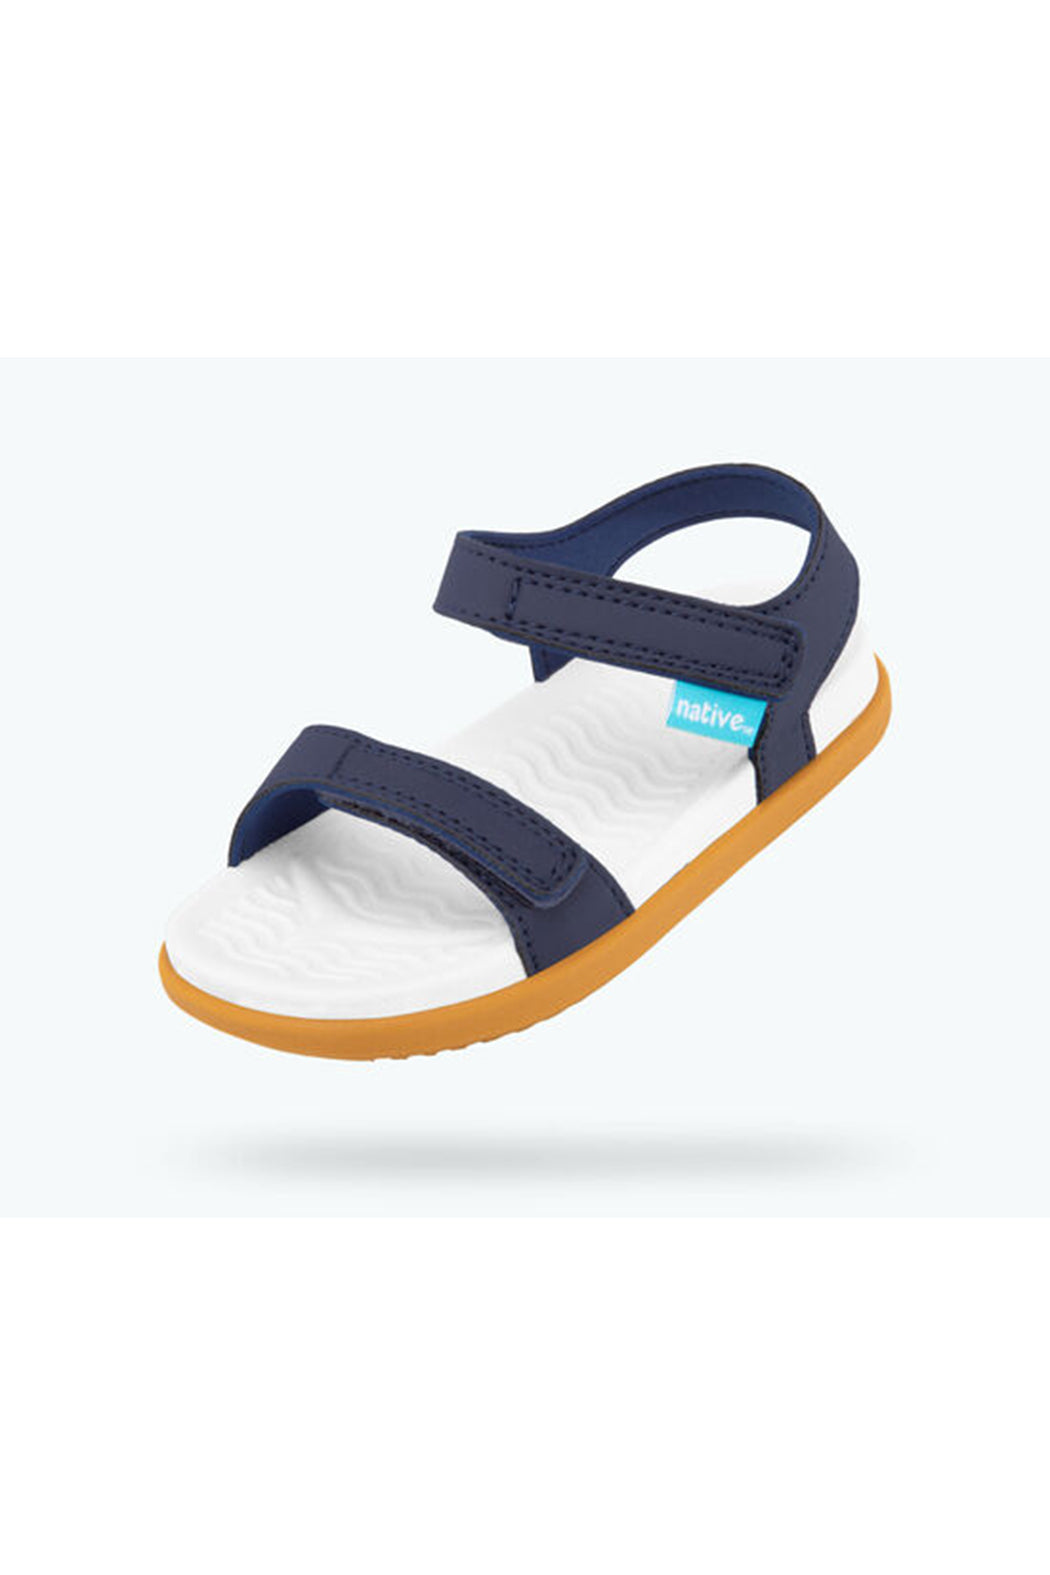 Native Charley Junior Sandals - Regatta Blue/Shell White/Toffee Brown